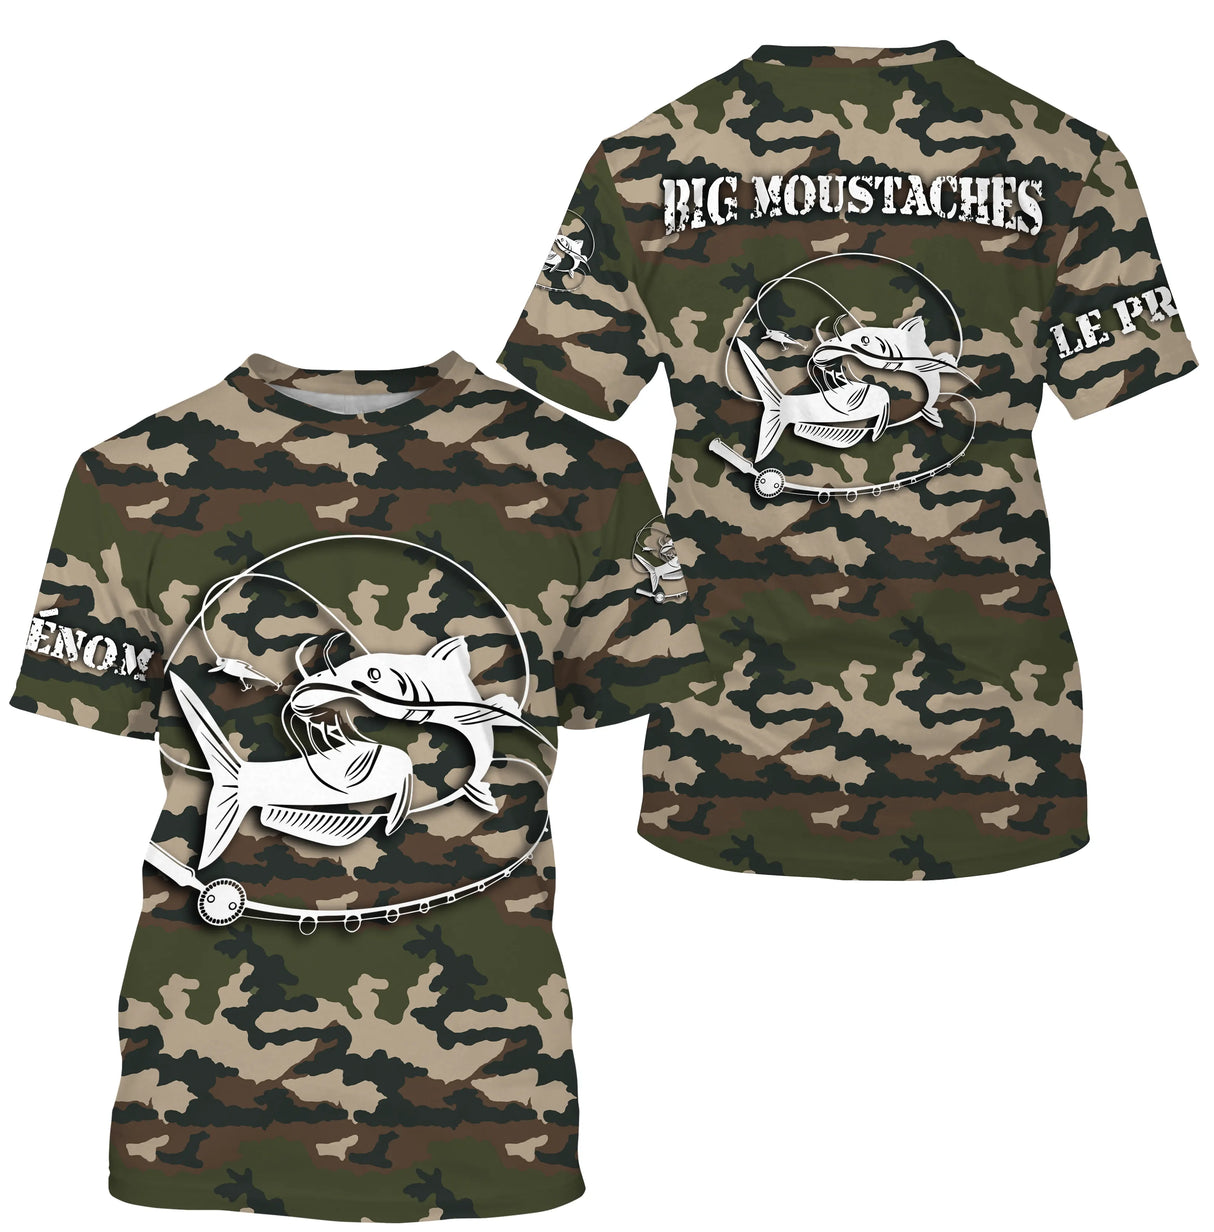 Camiseta Humor Pesca Bagre, Regalo Original Pescador, Camuflaje para Pesca, Camiseta Personalizada, BIGOTES GRANDES - CTS26042216